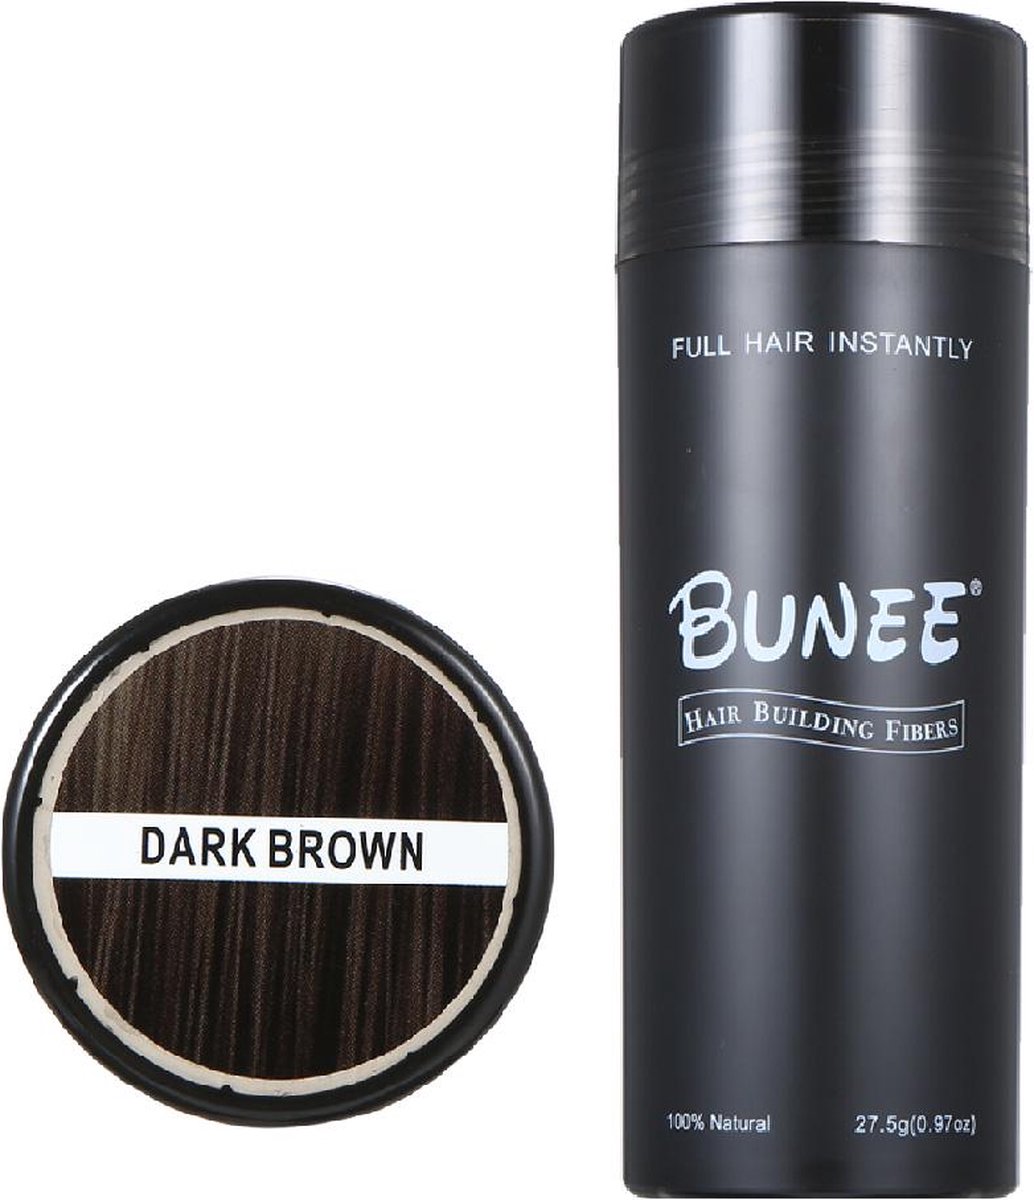 Bunee Hair Fiber - Haarpoeder - Haarverdikker - 12 g - Travel Size - Dark Brown